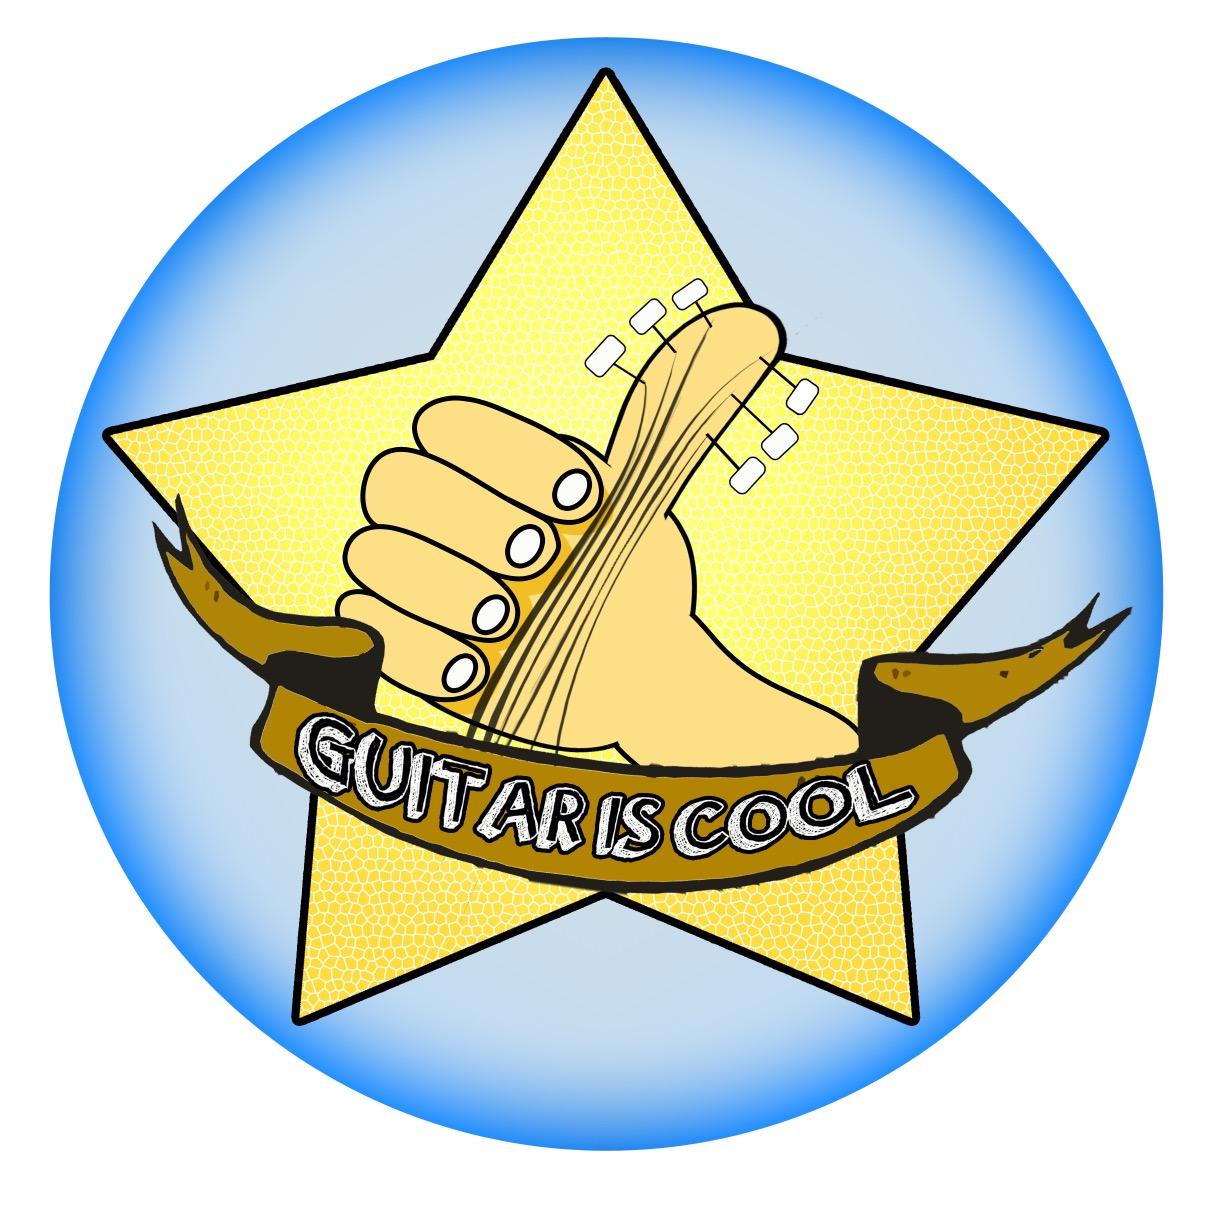 Canal de youtube dedicado a dar clases de guitarra para aprender a tocar. Si quieres aprender, sucribete!!